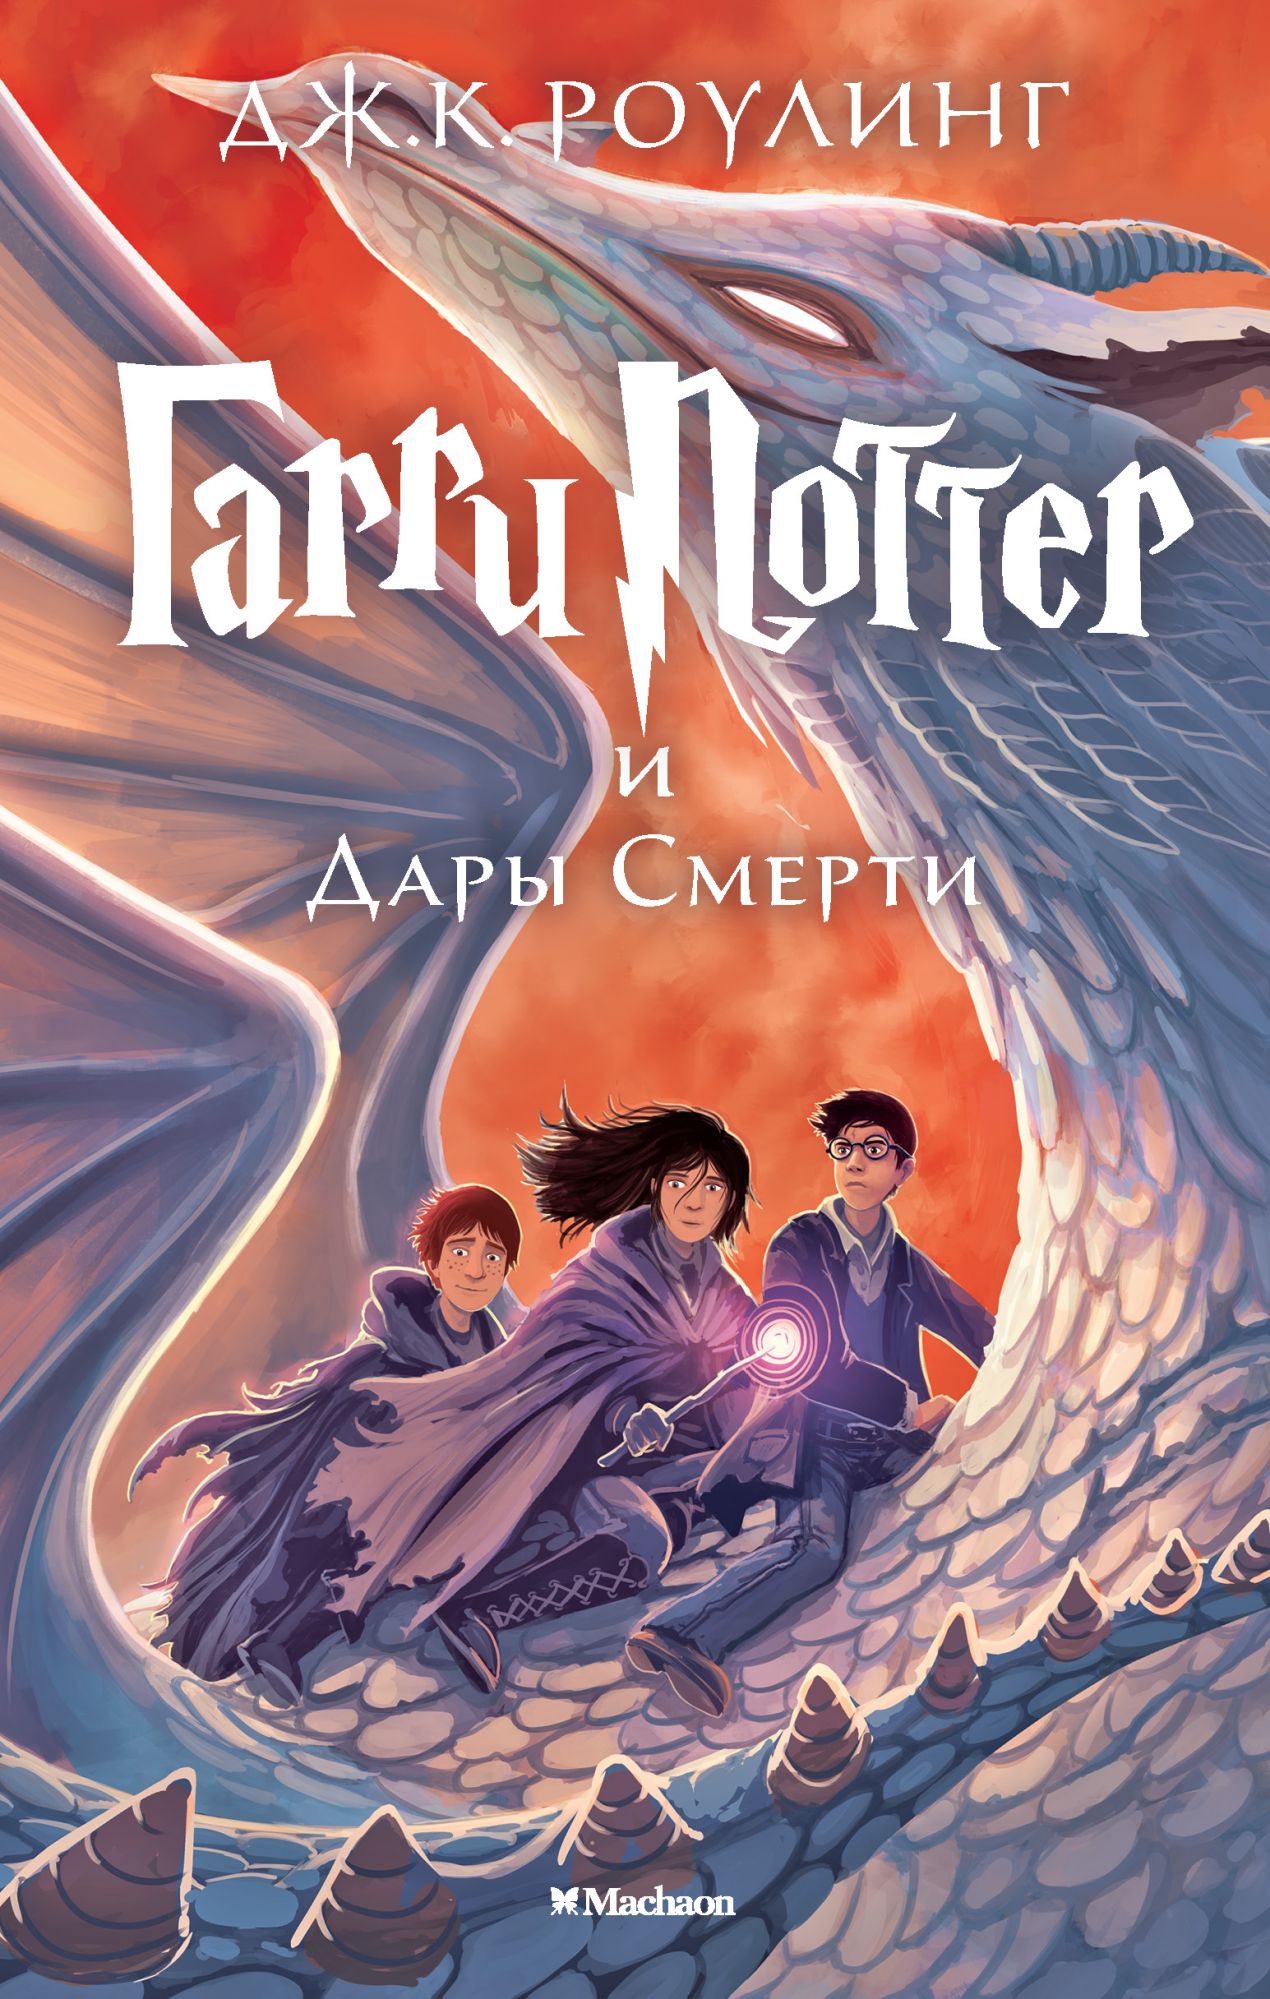 Book “Гарри Поттер и Дары Смерти” by Дж.К. Роулинг